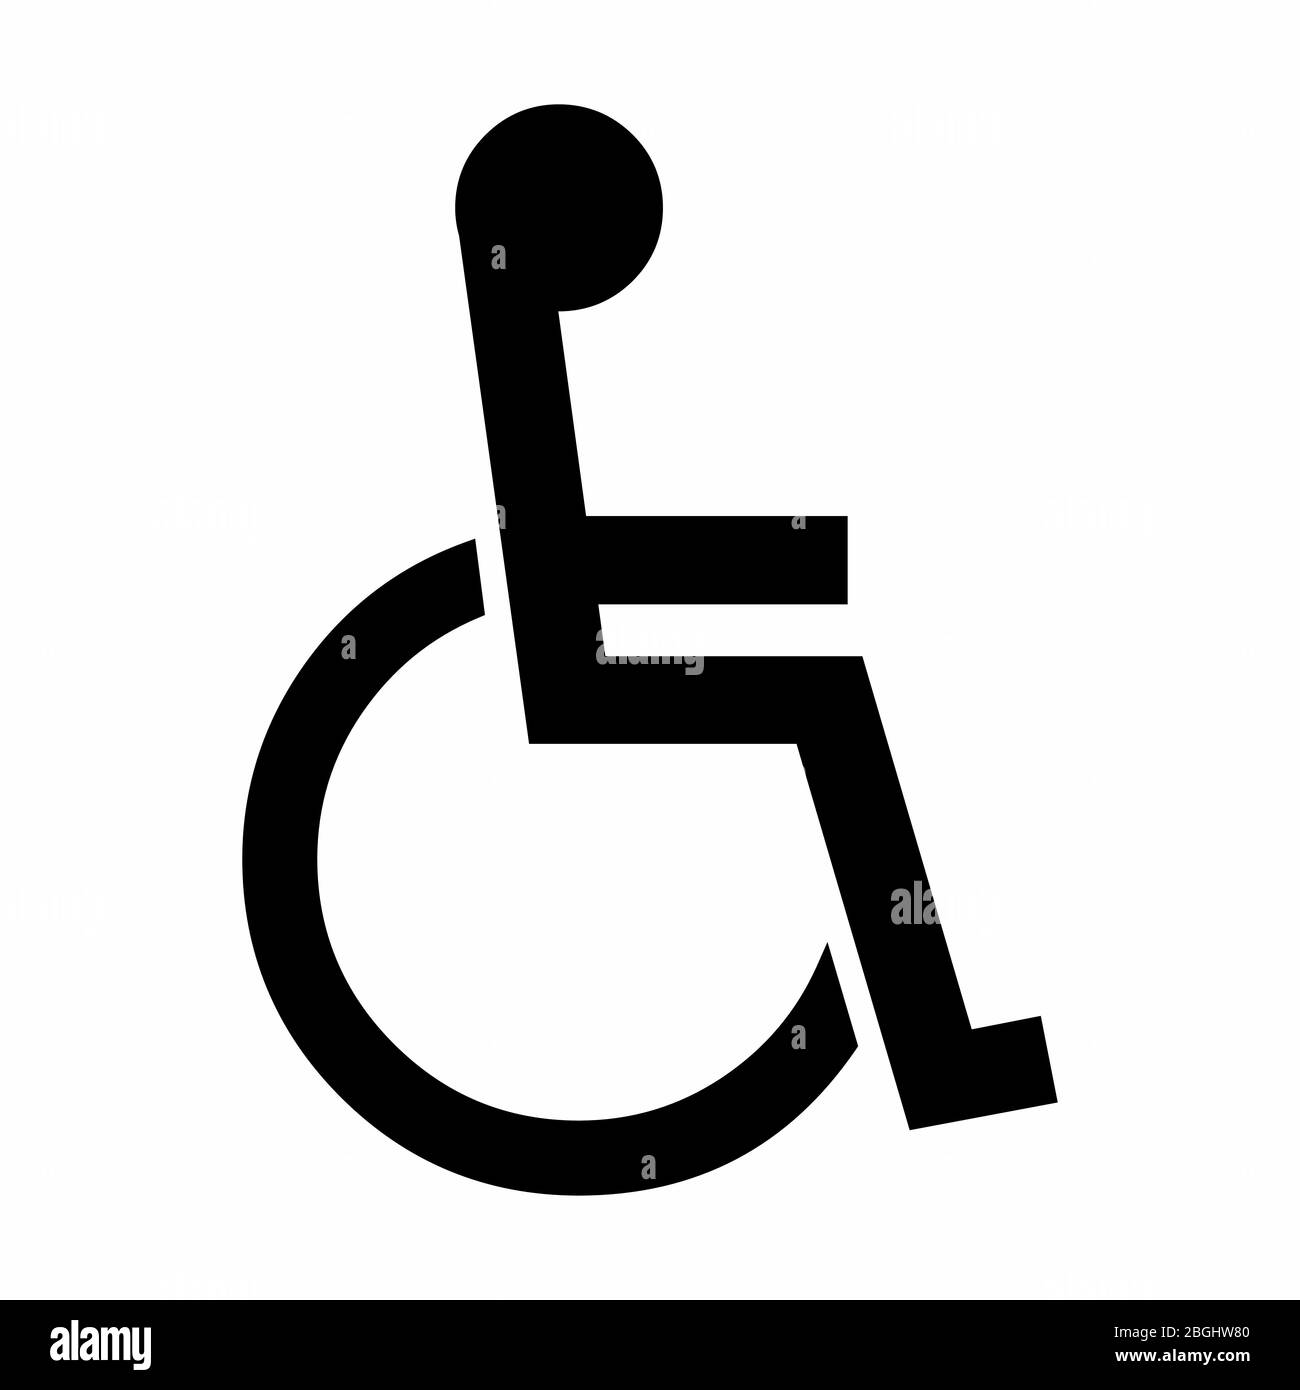 Wheelchair icon illustration Stock Vector